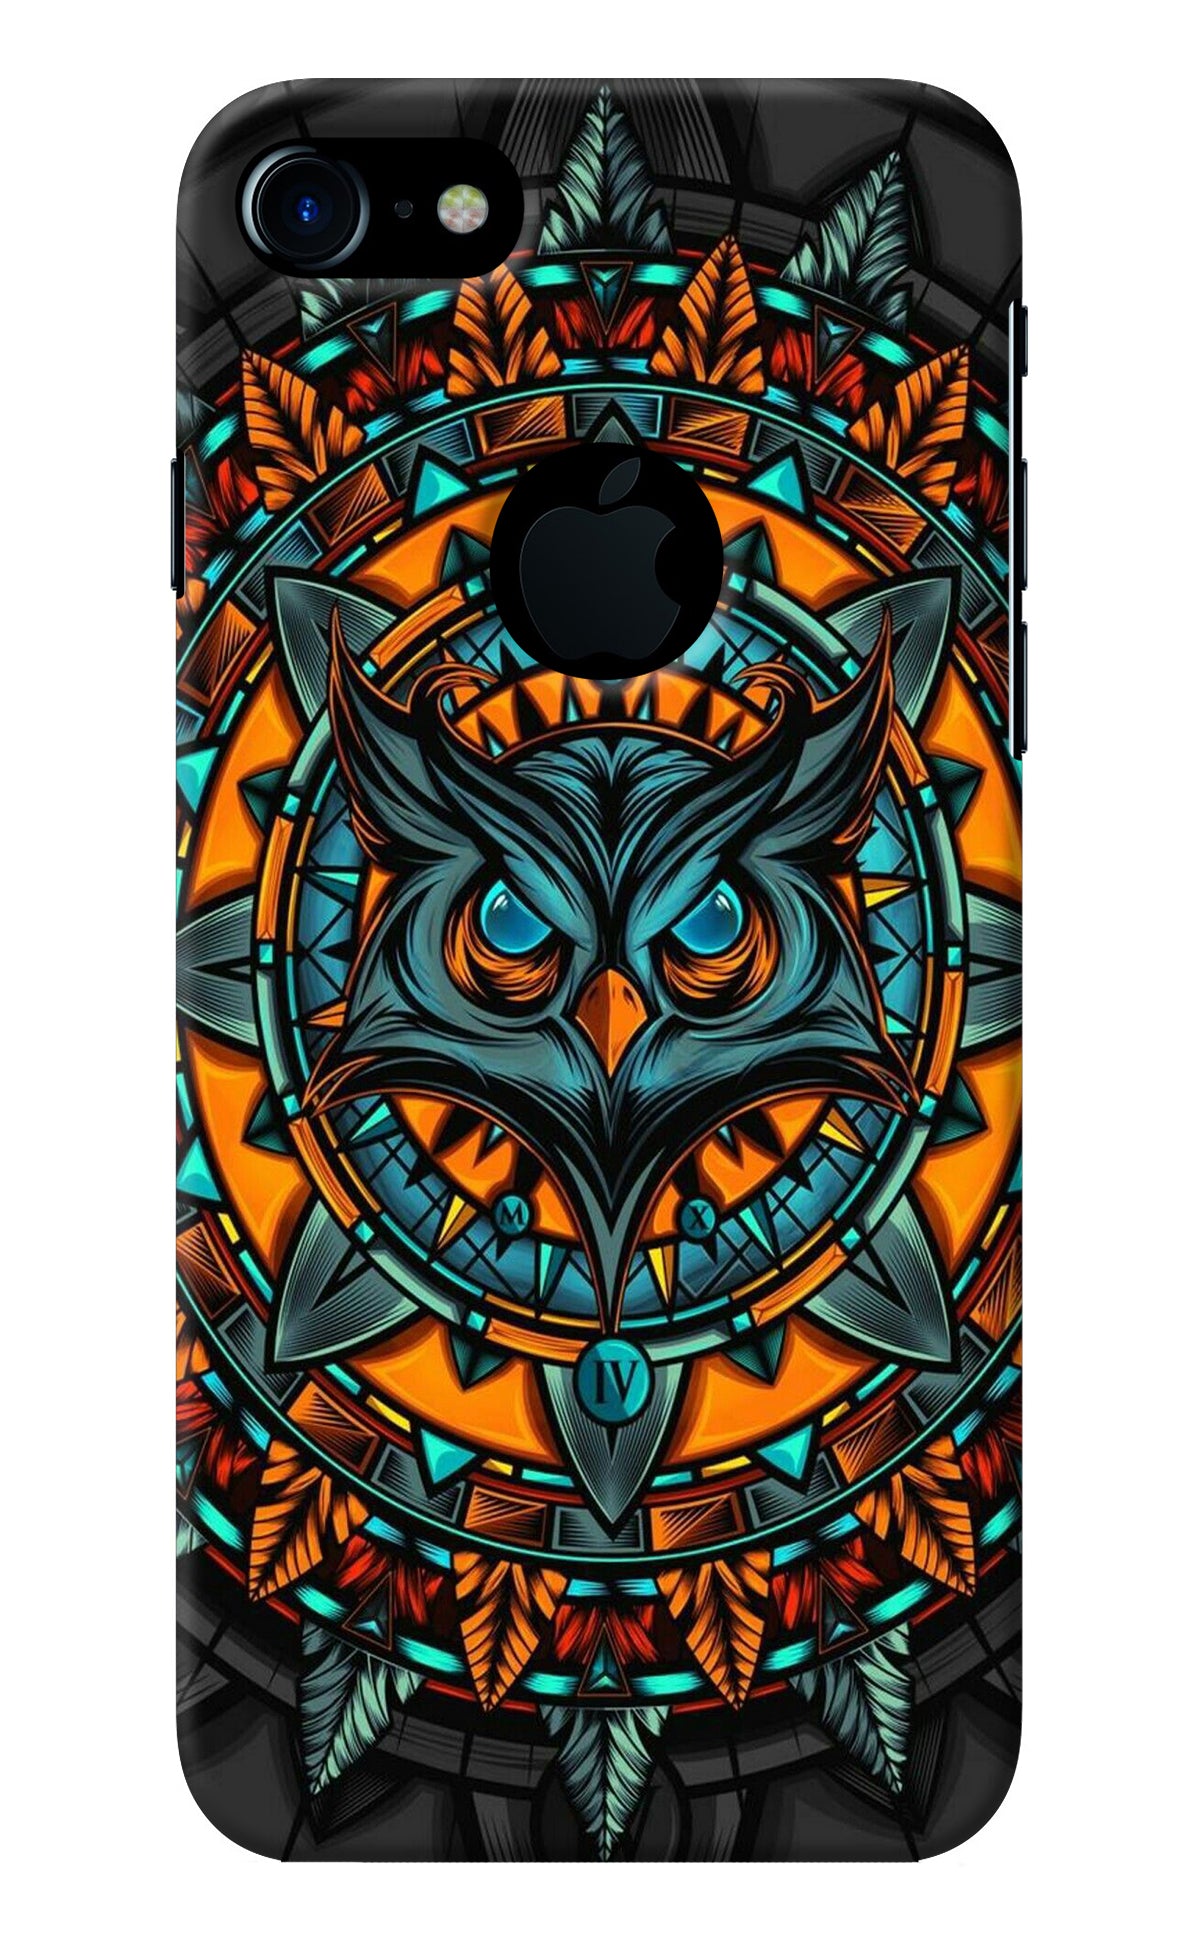 Angry Owl Art iPhone 7 Logocut Back Cover